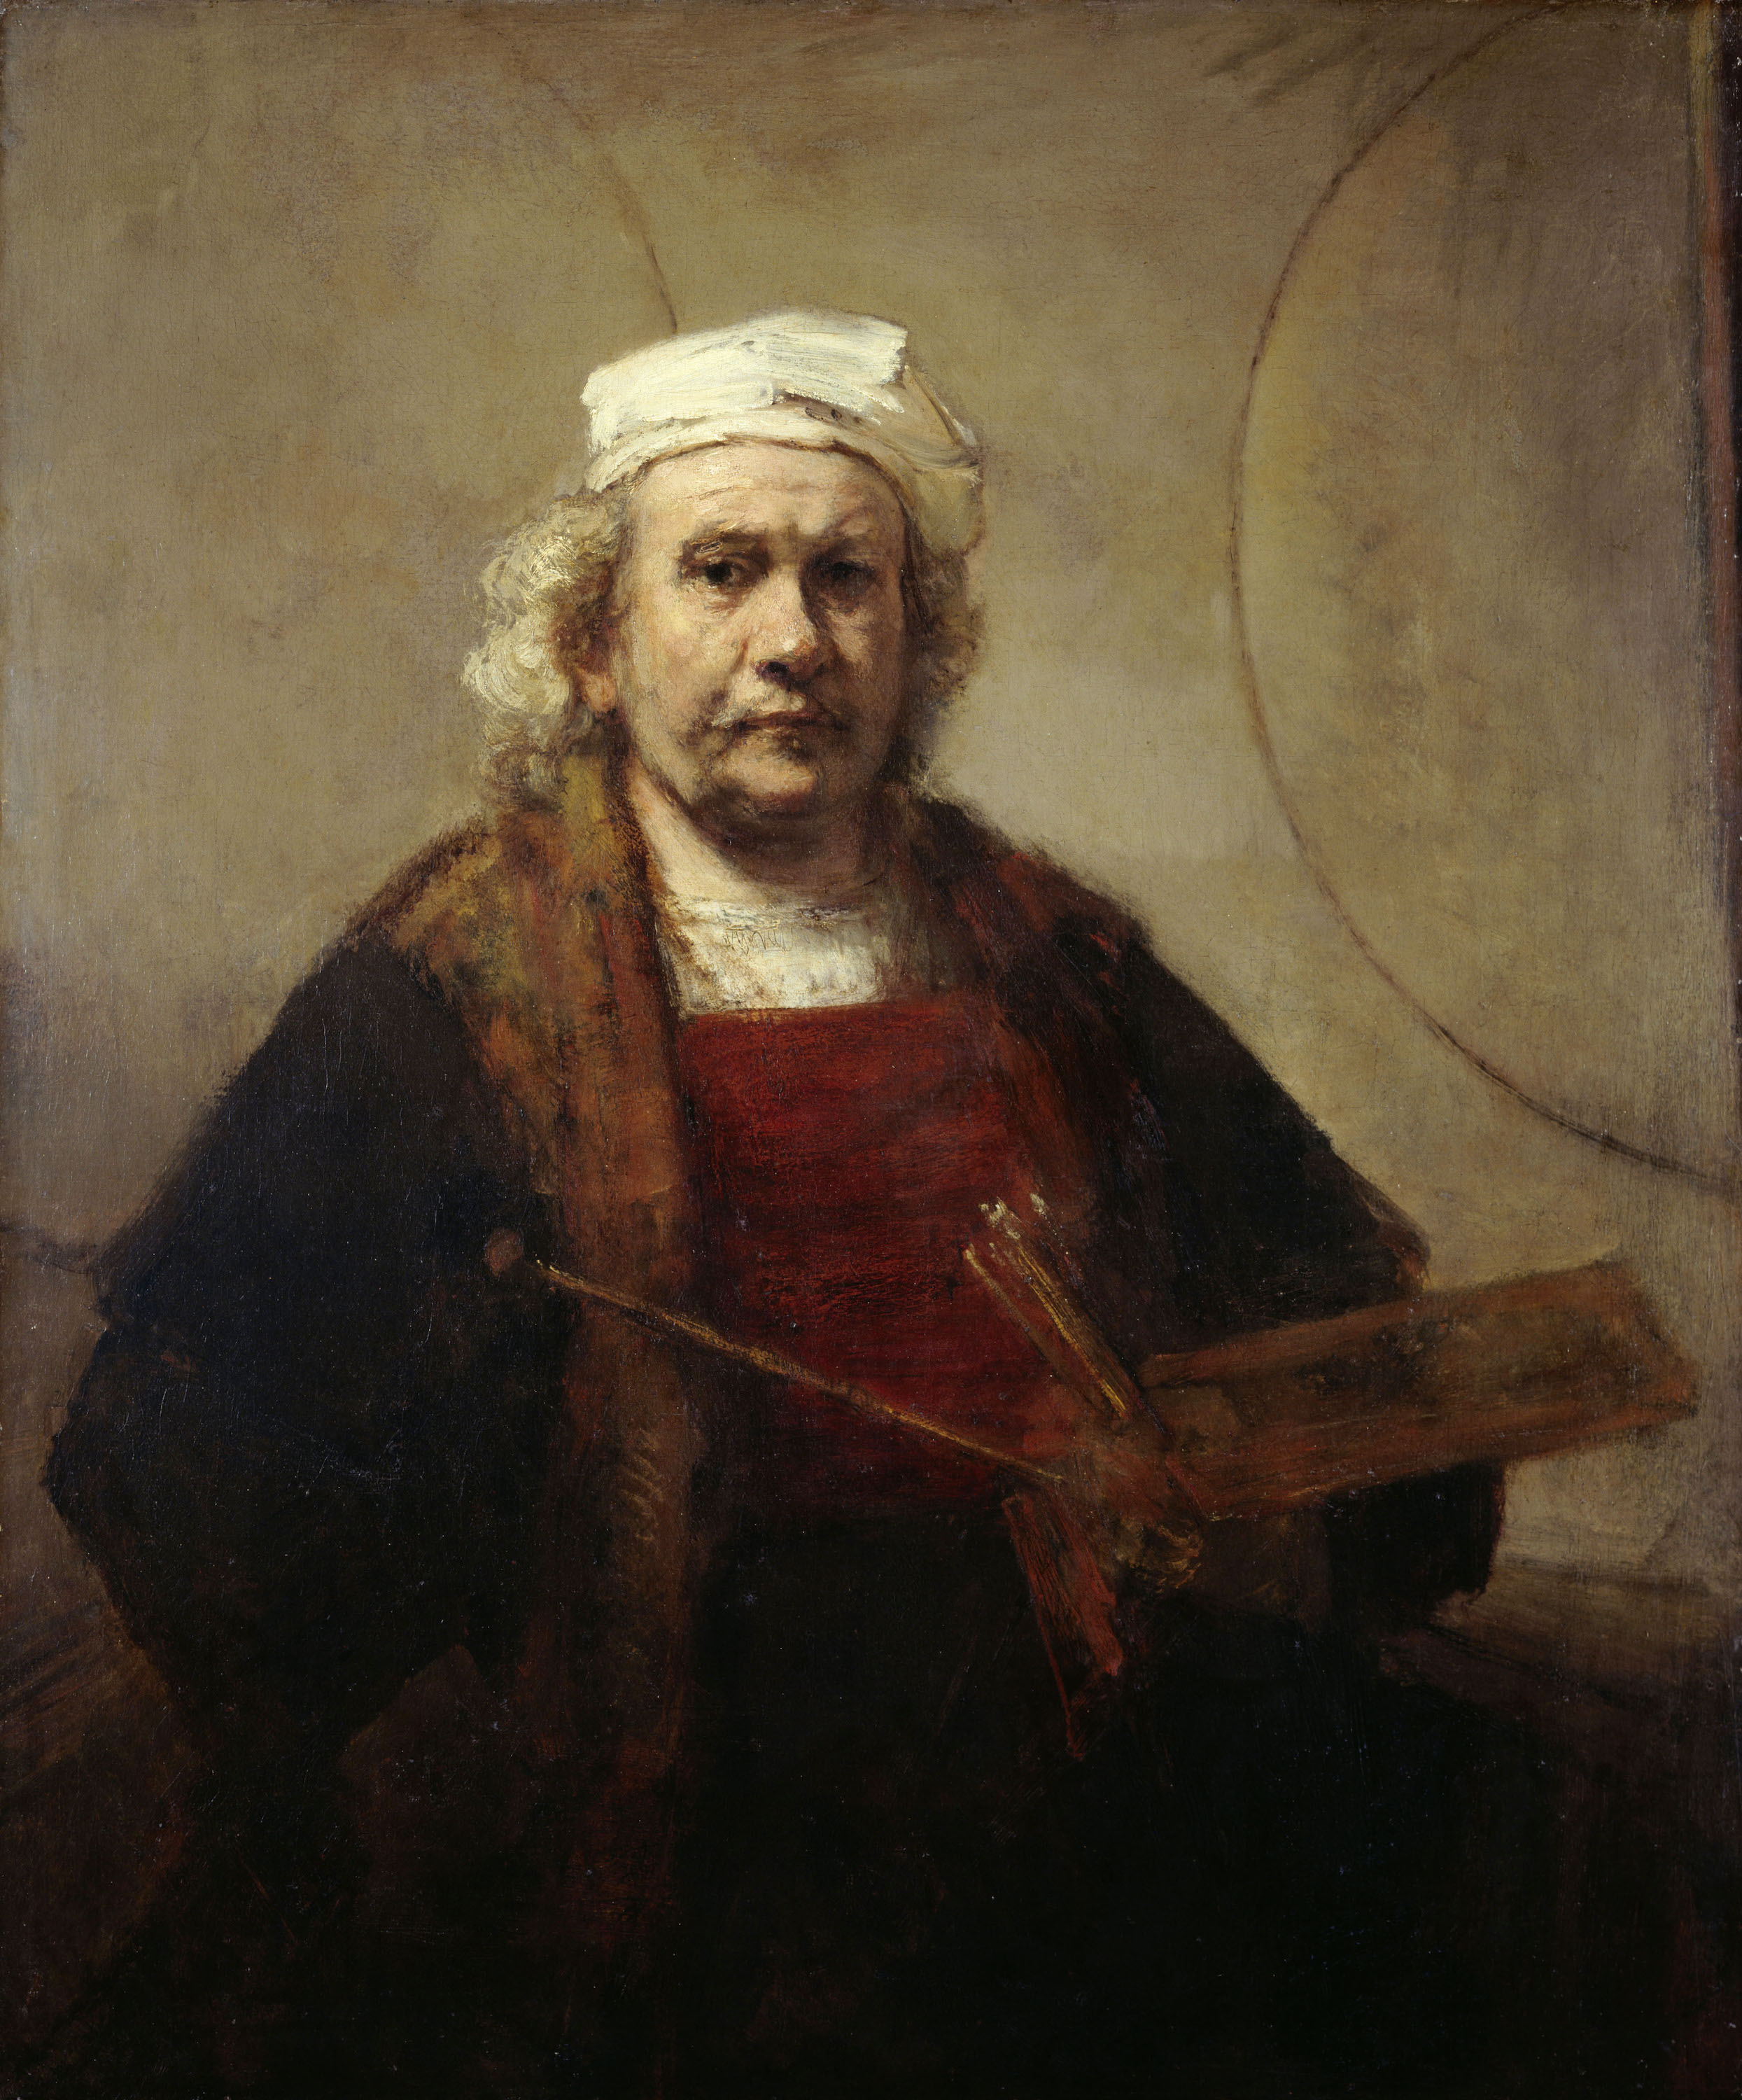 Self-Portrait with Two Circles by Rembrandt van Rijn - c. 1665–1669 - 114.3 cm × 94 cm Kenwood House